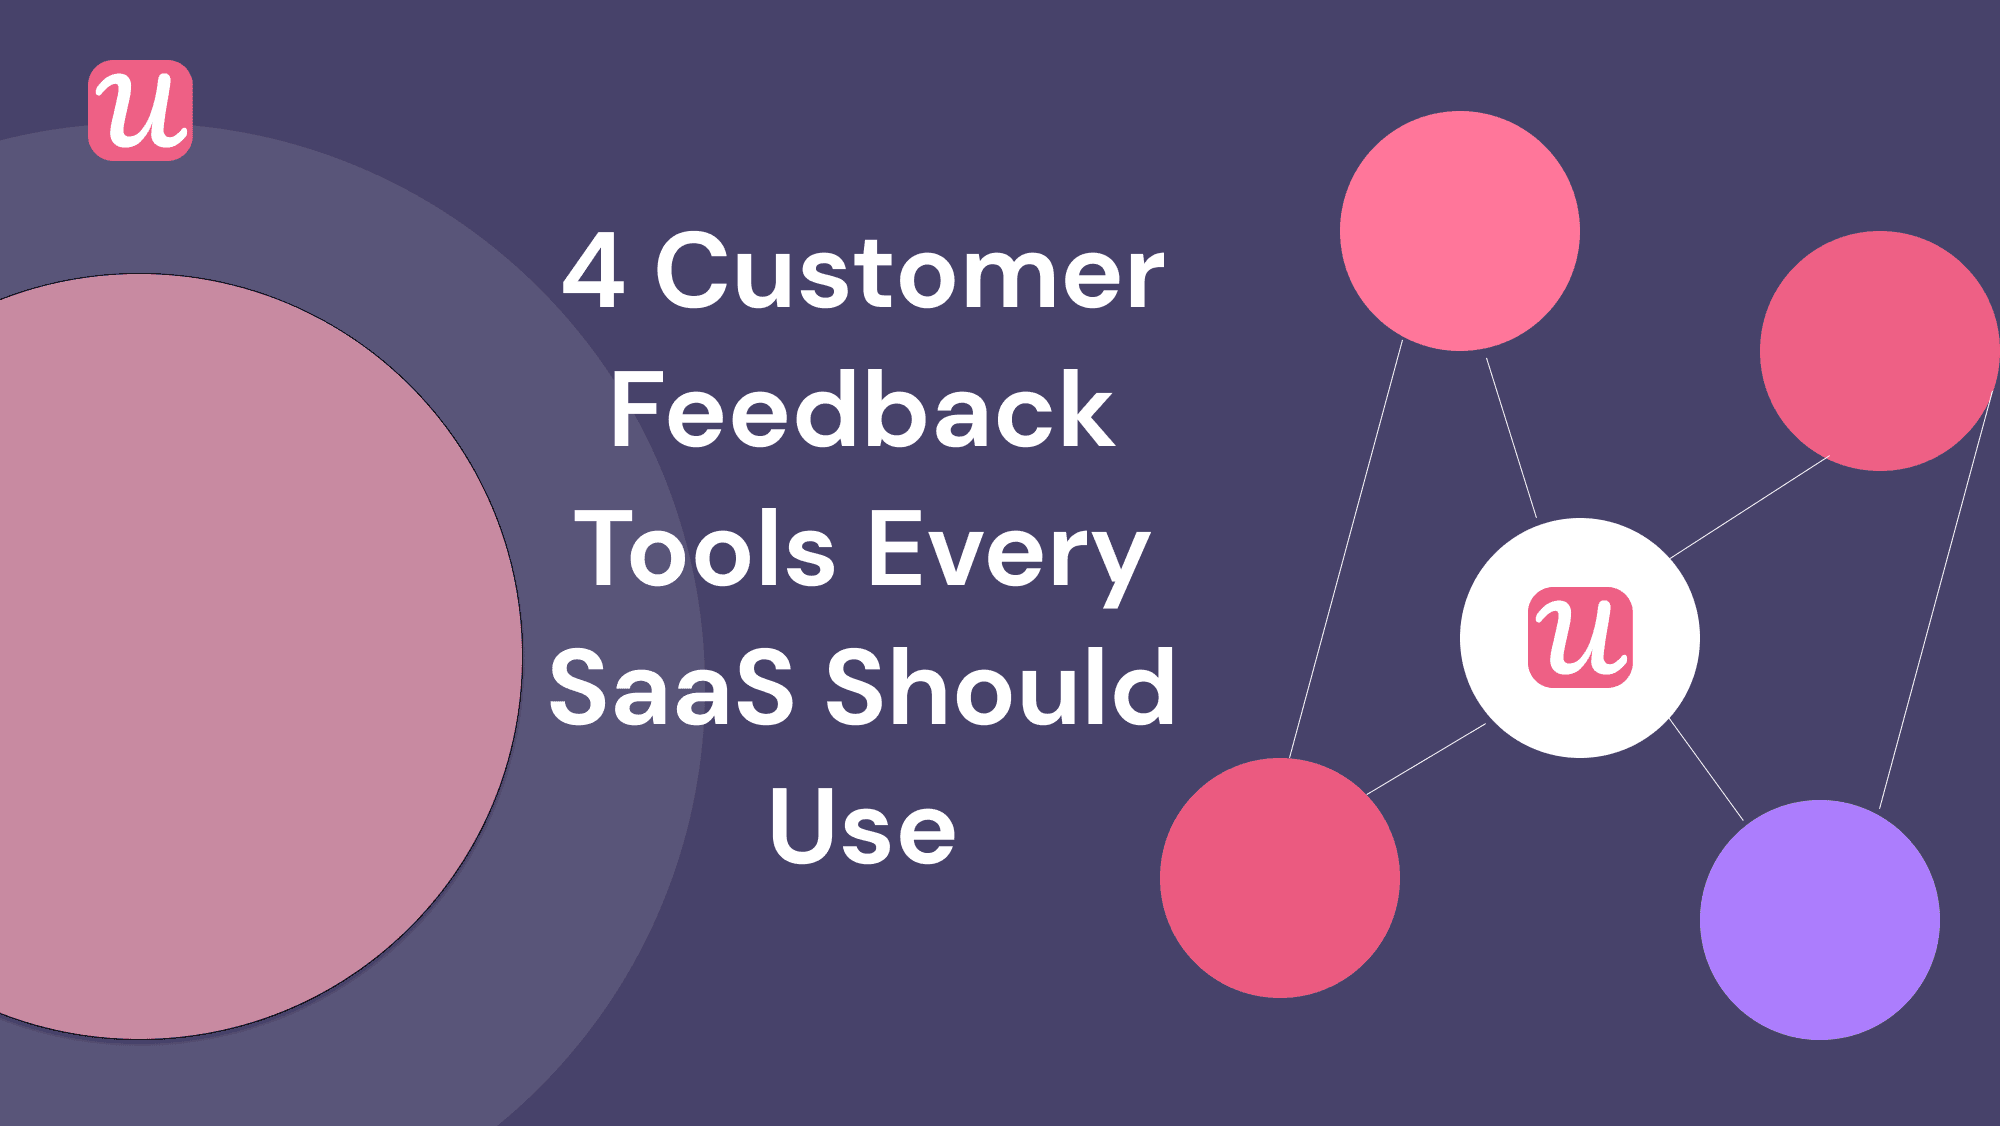 The 4 Customer Feedback Tools Every SaaS Company Should Be Using